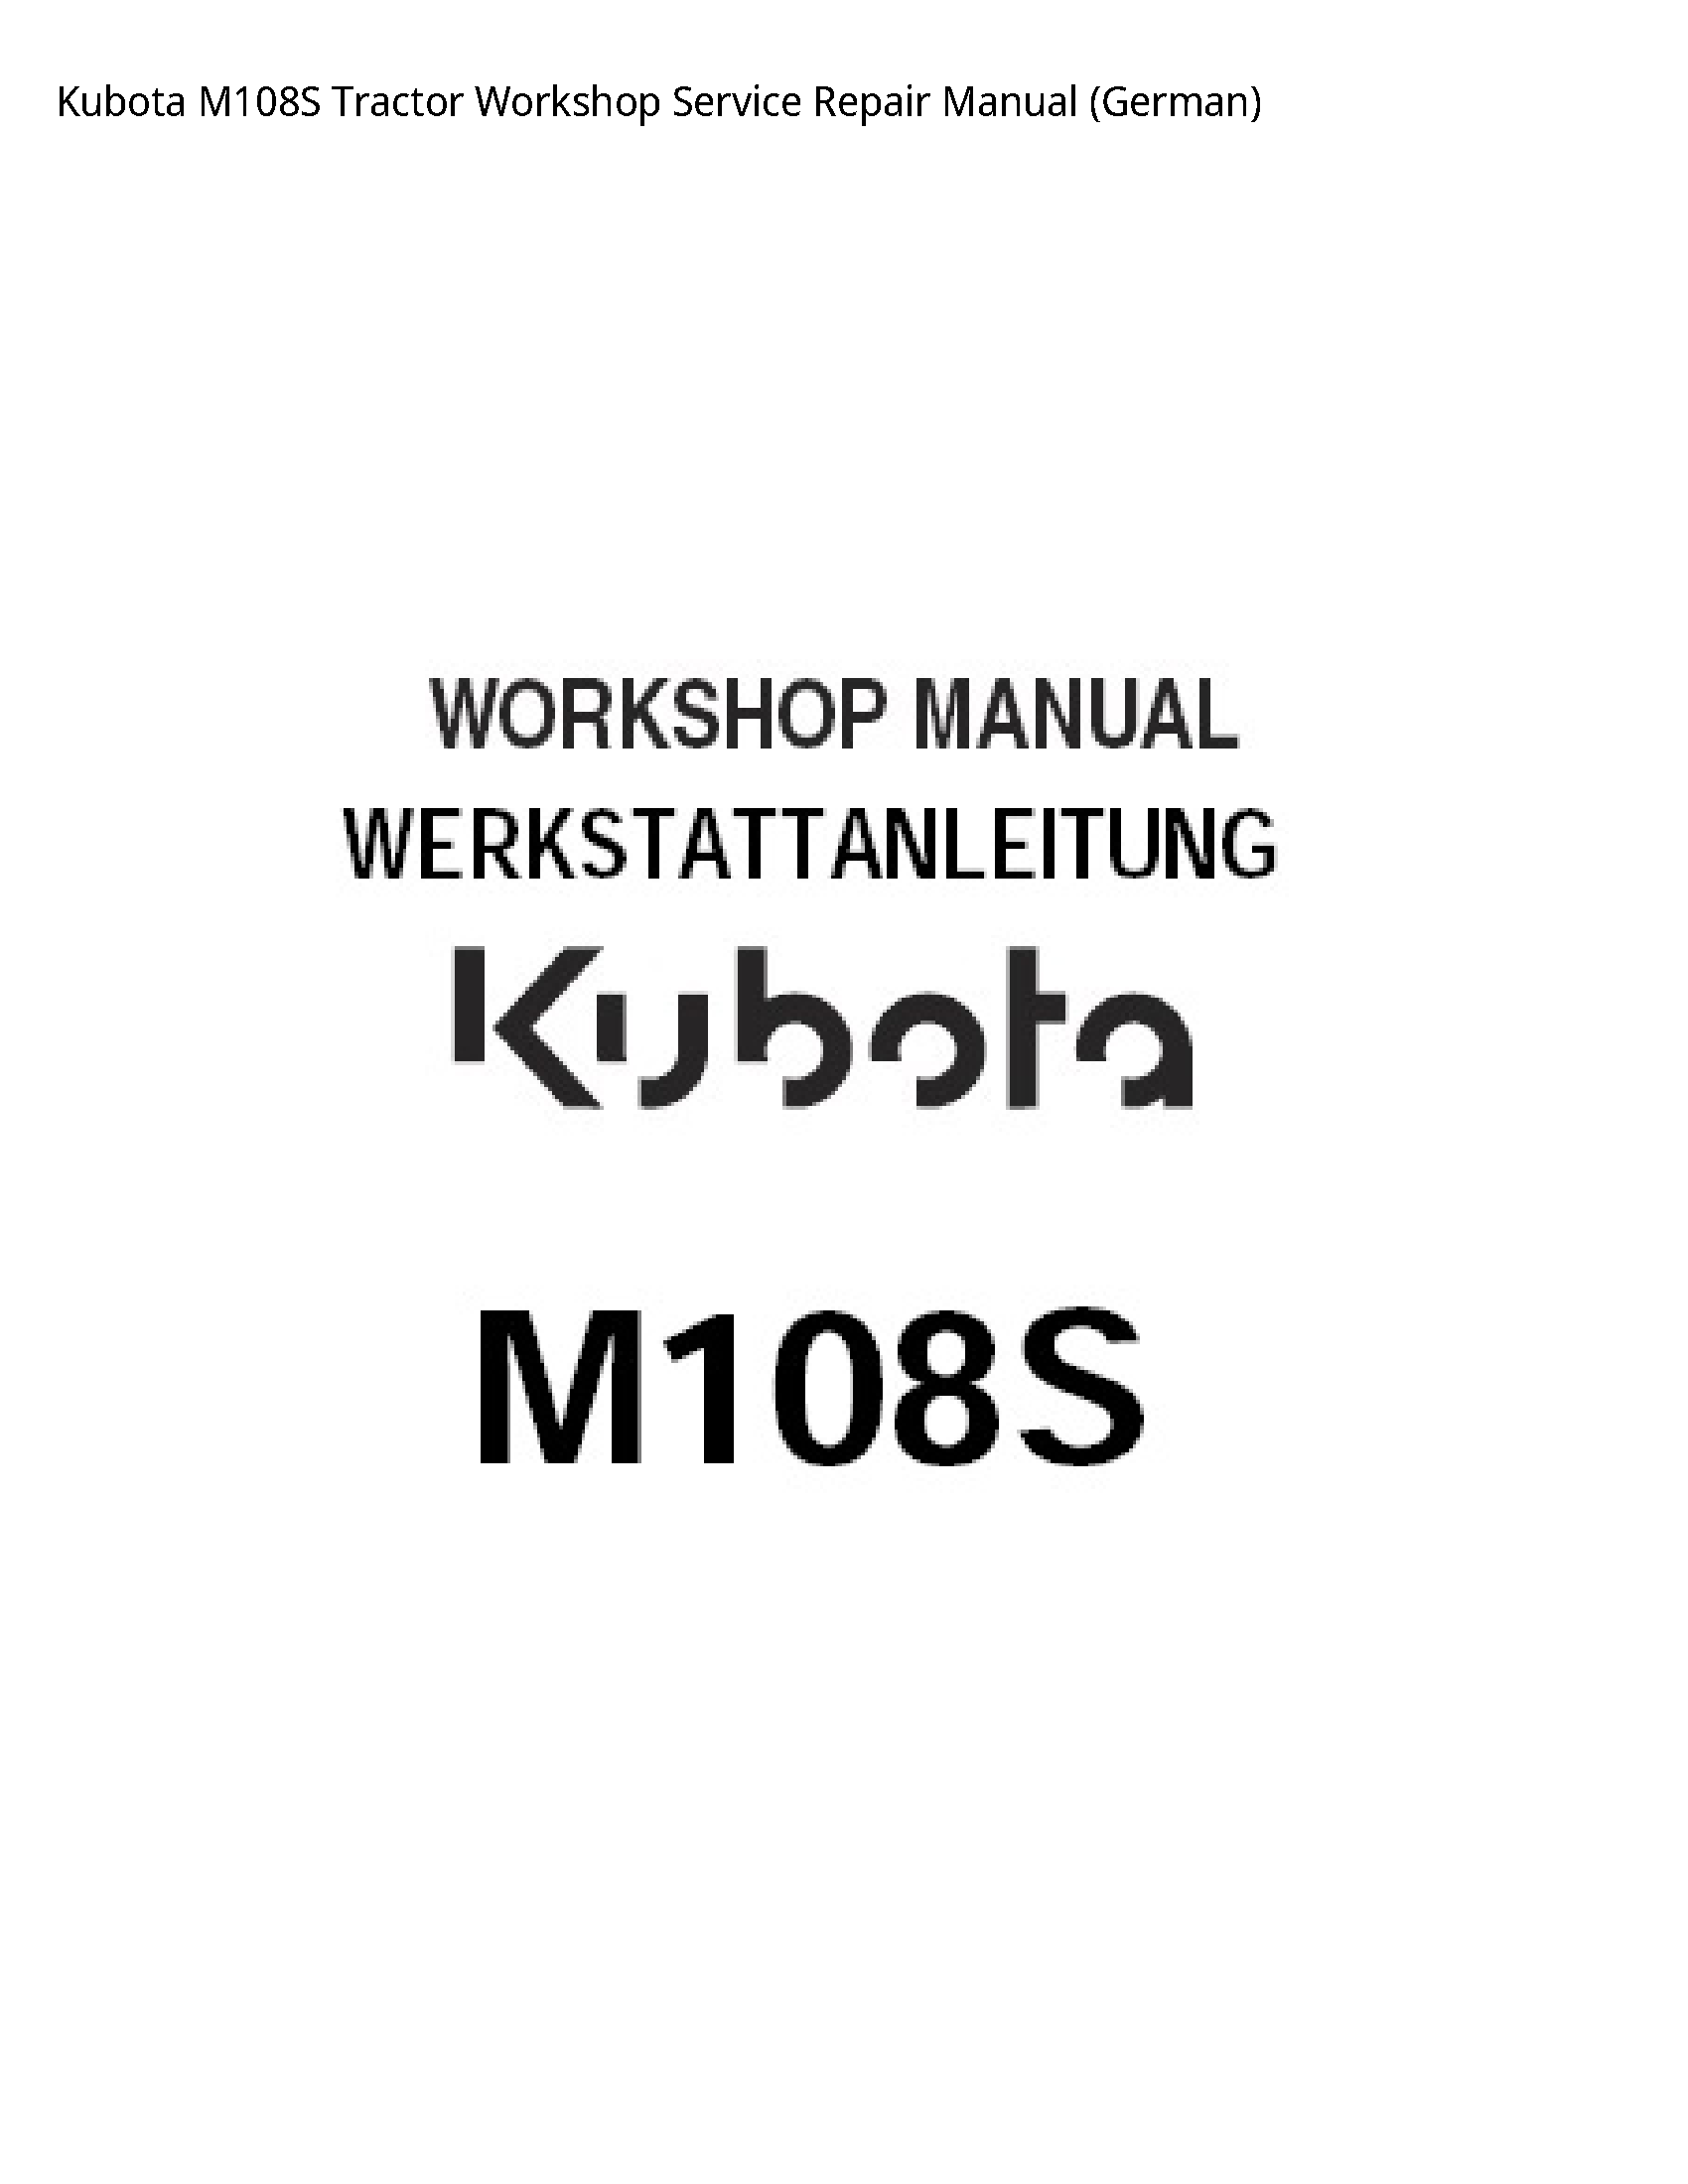 Kubota M108S Tractor manual